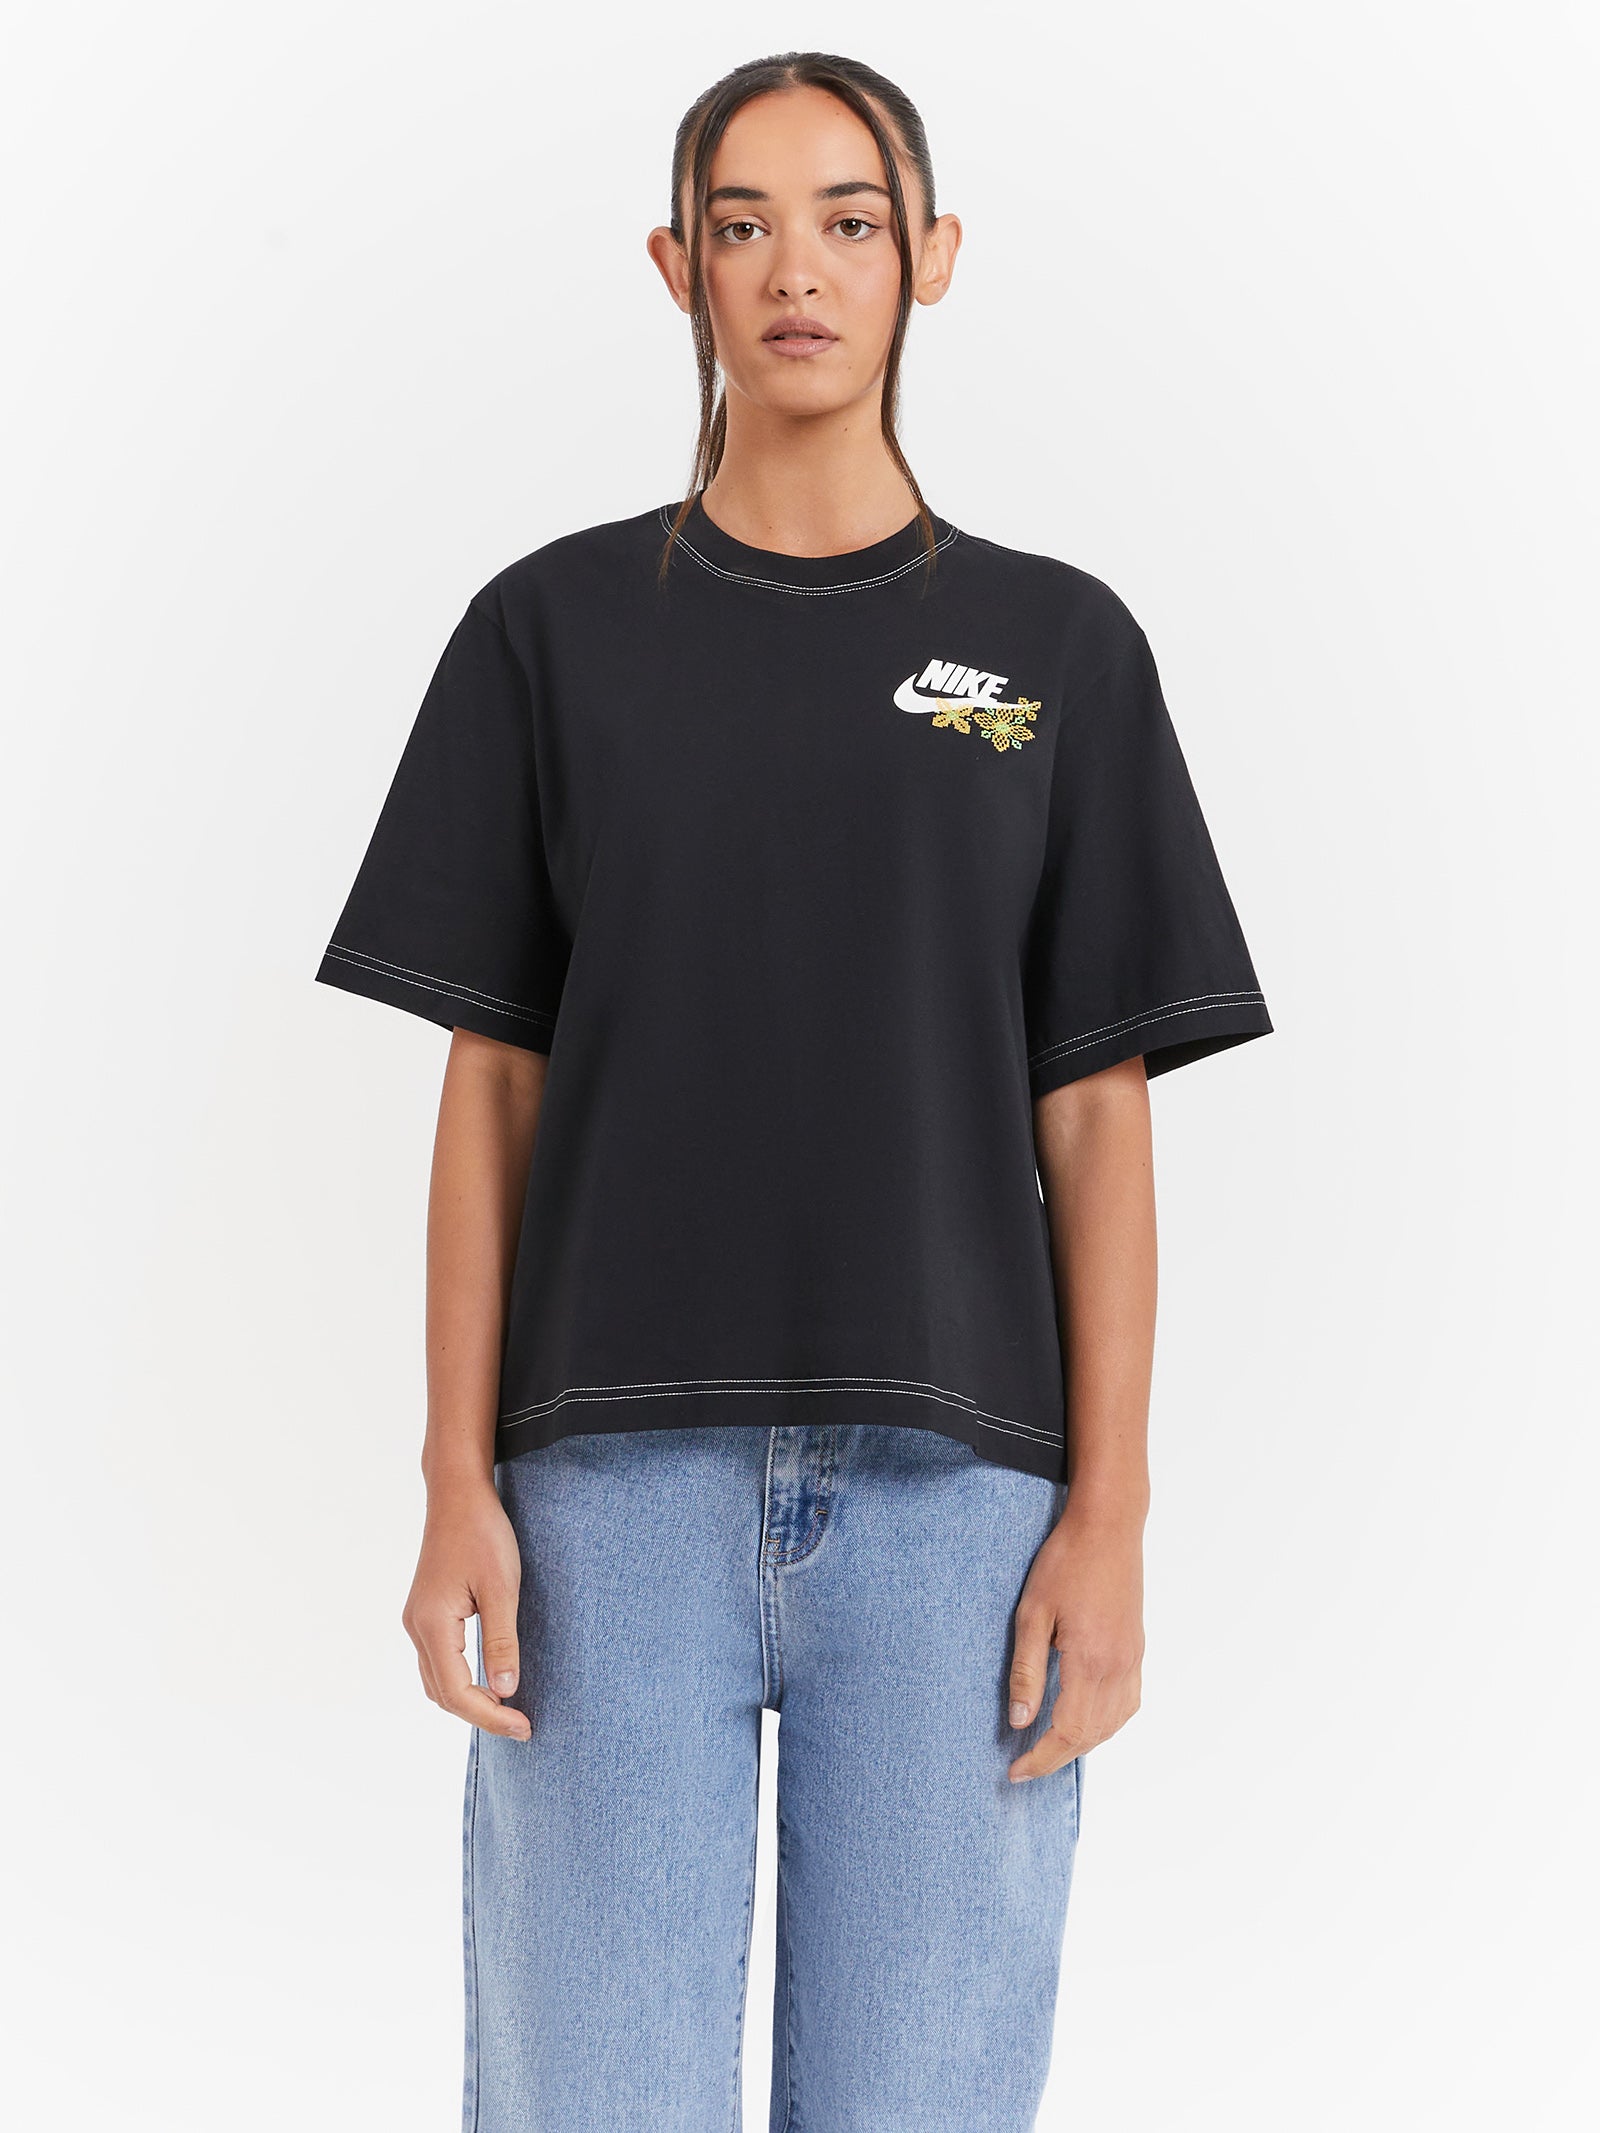 in Boxy OC1 Sportswear Store Sleeve Black Short T-Shirt - Glue